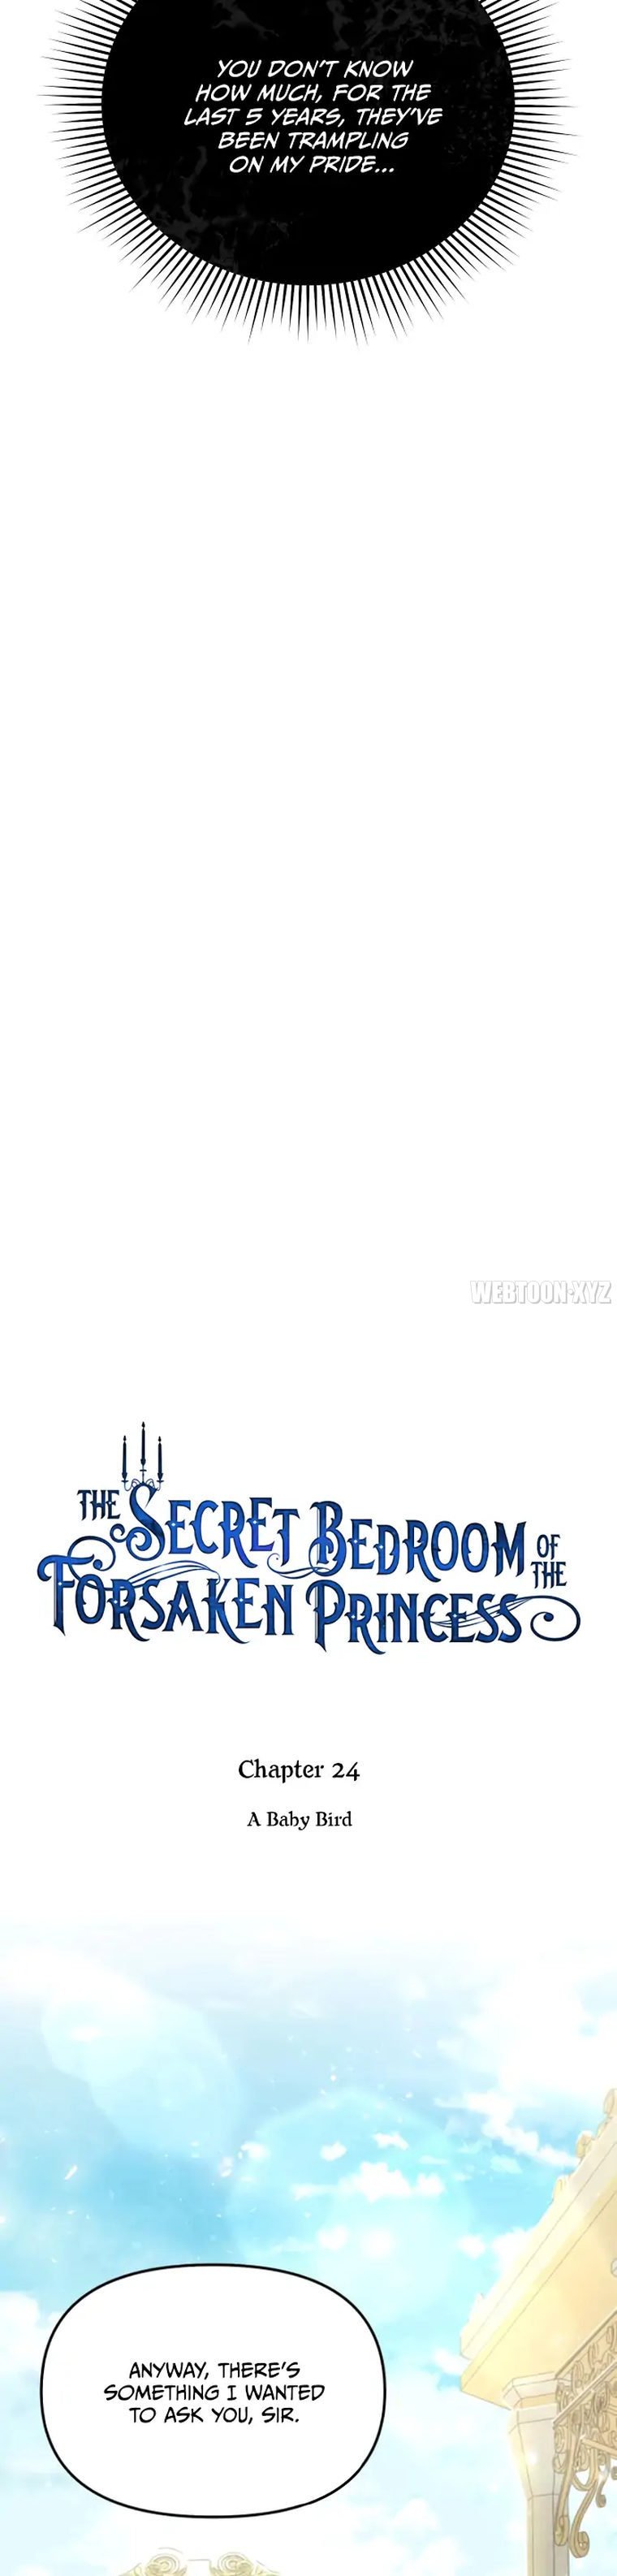 the-secret-bedroom-of-the-forsaken-princess-chap-24-7